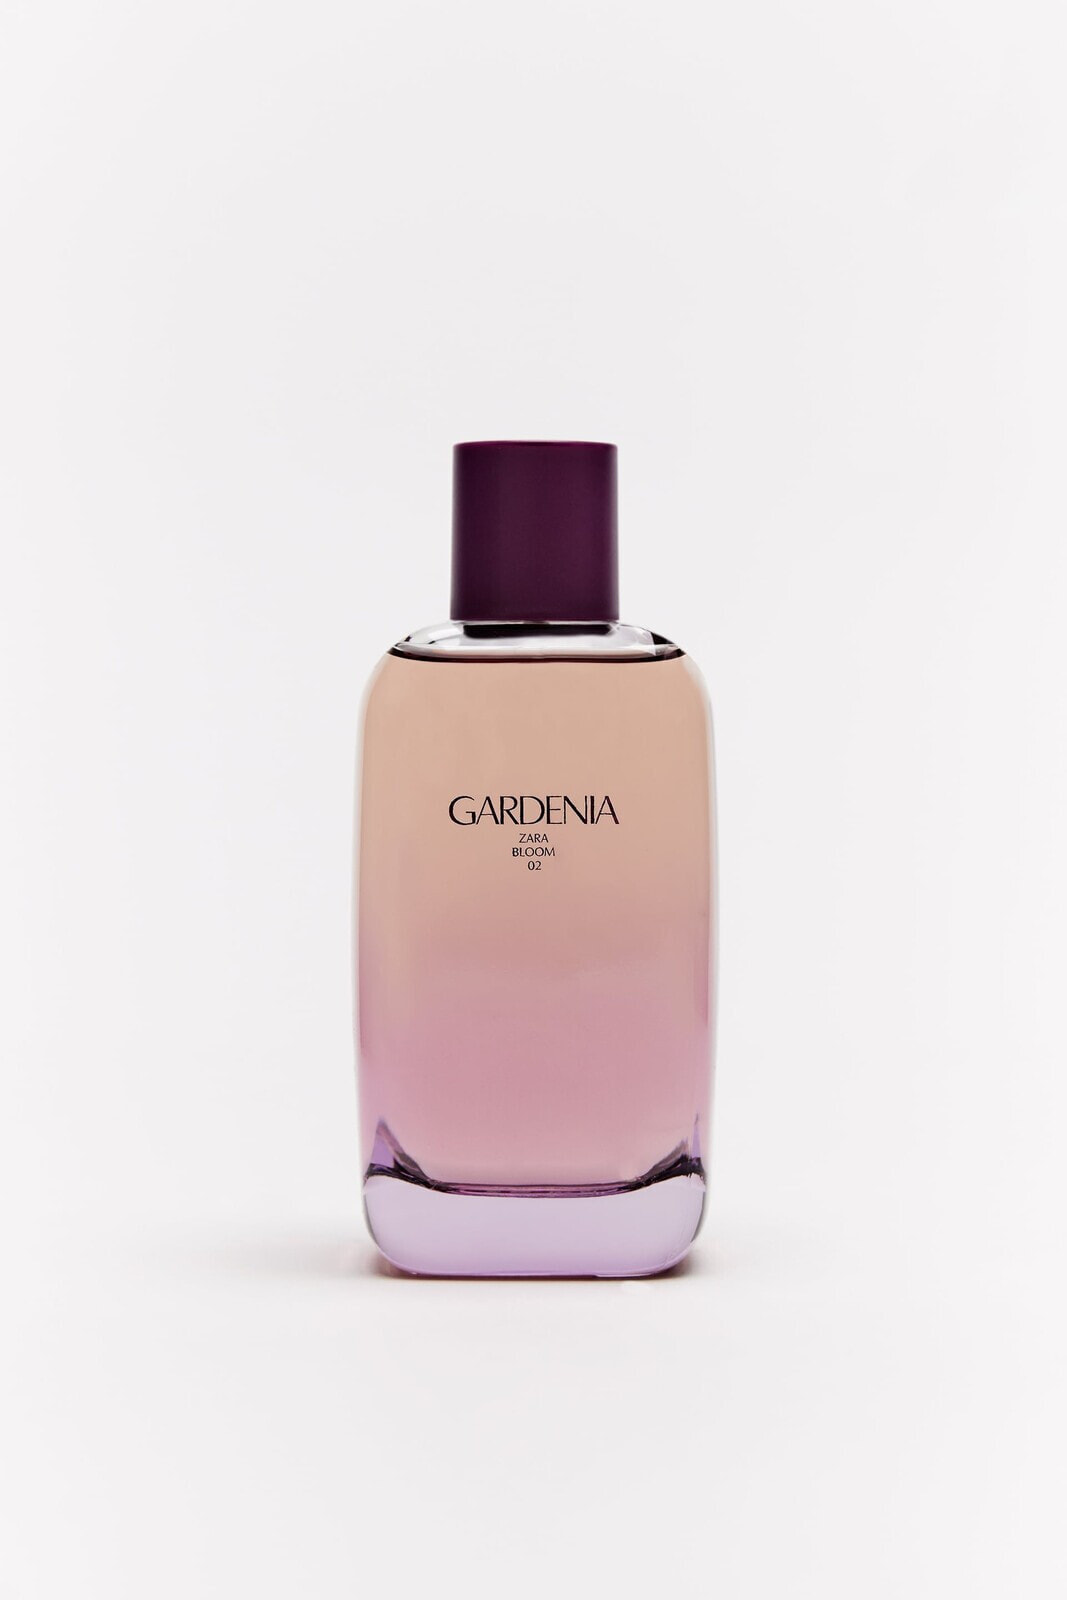 Gardenia 180 ml / 6.09 oz